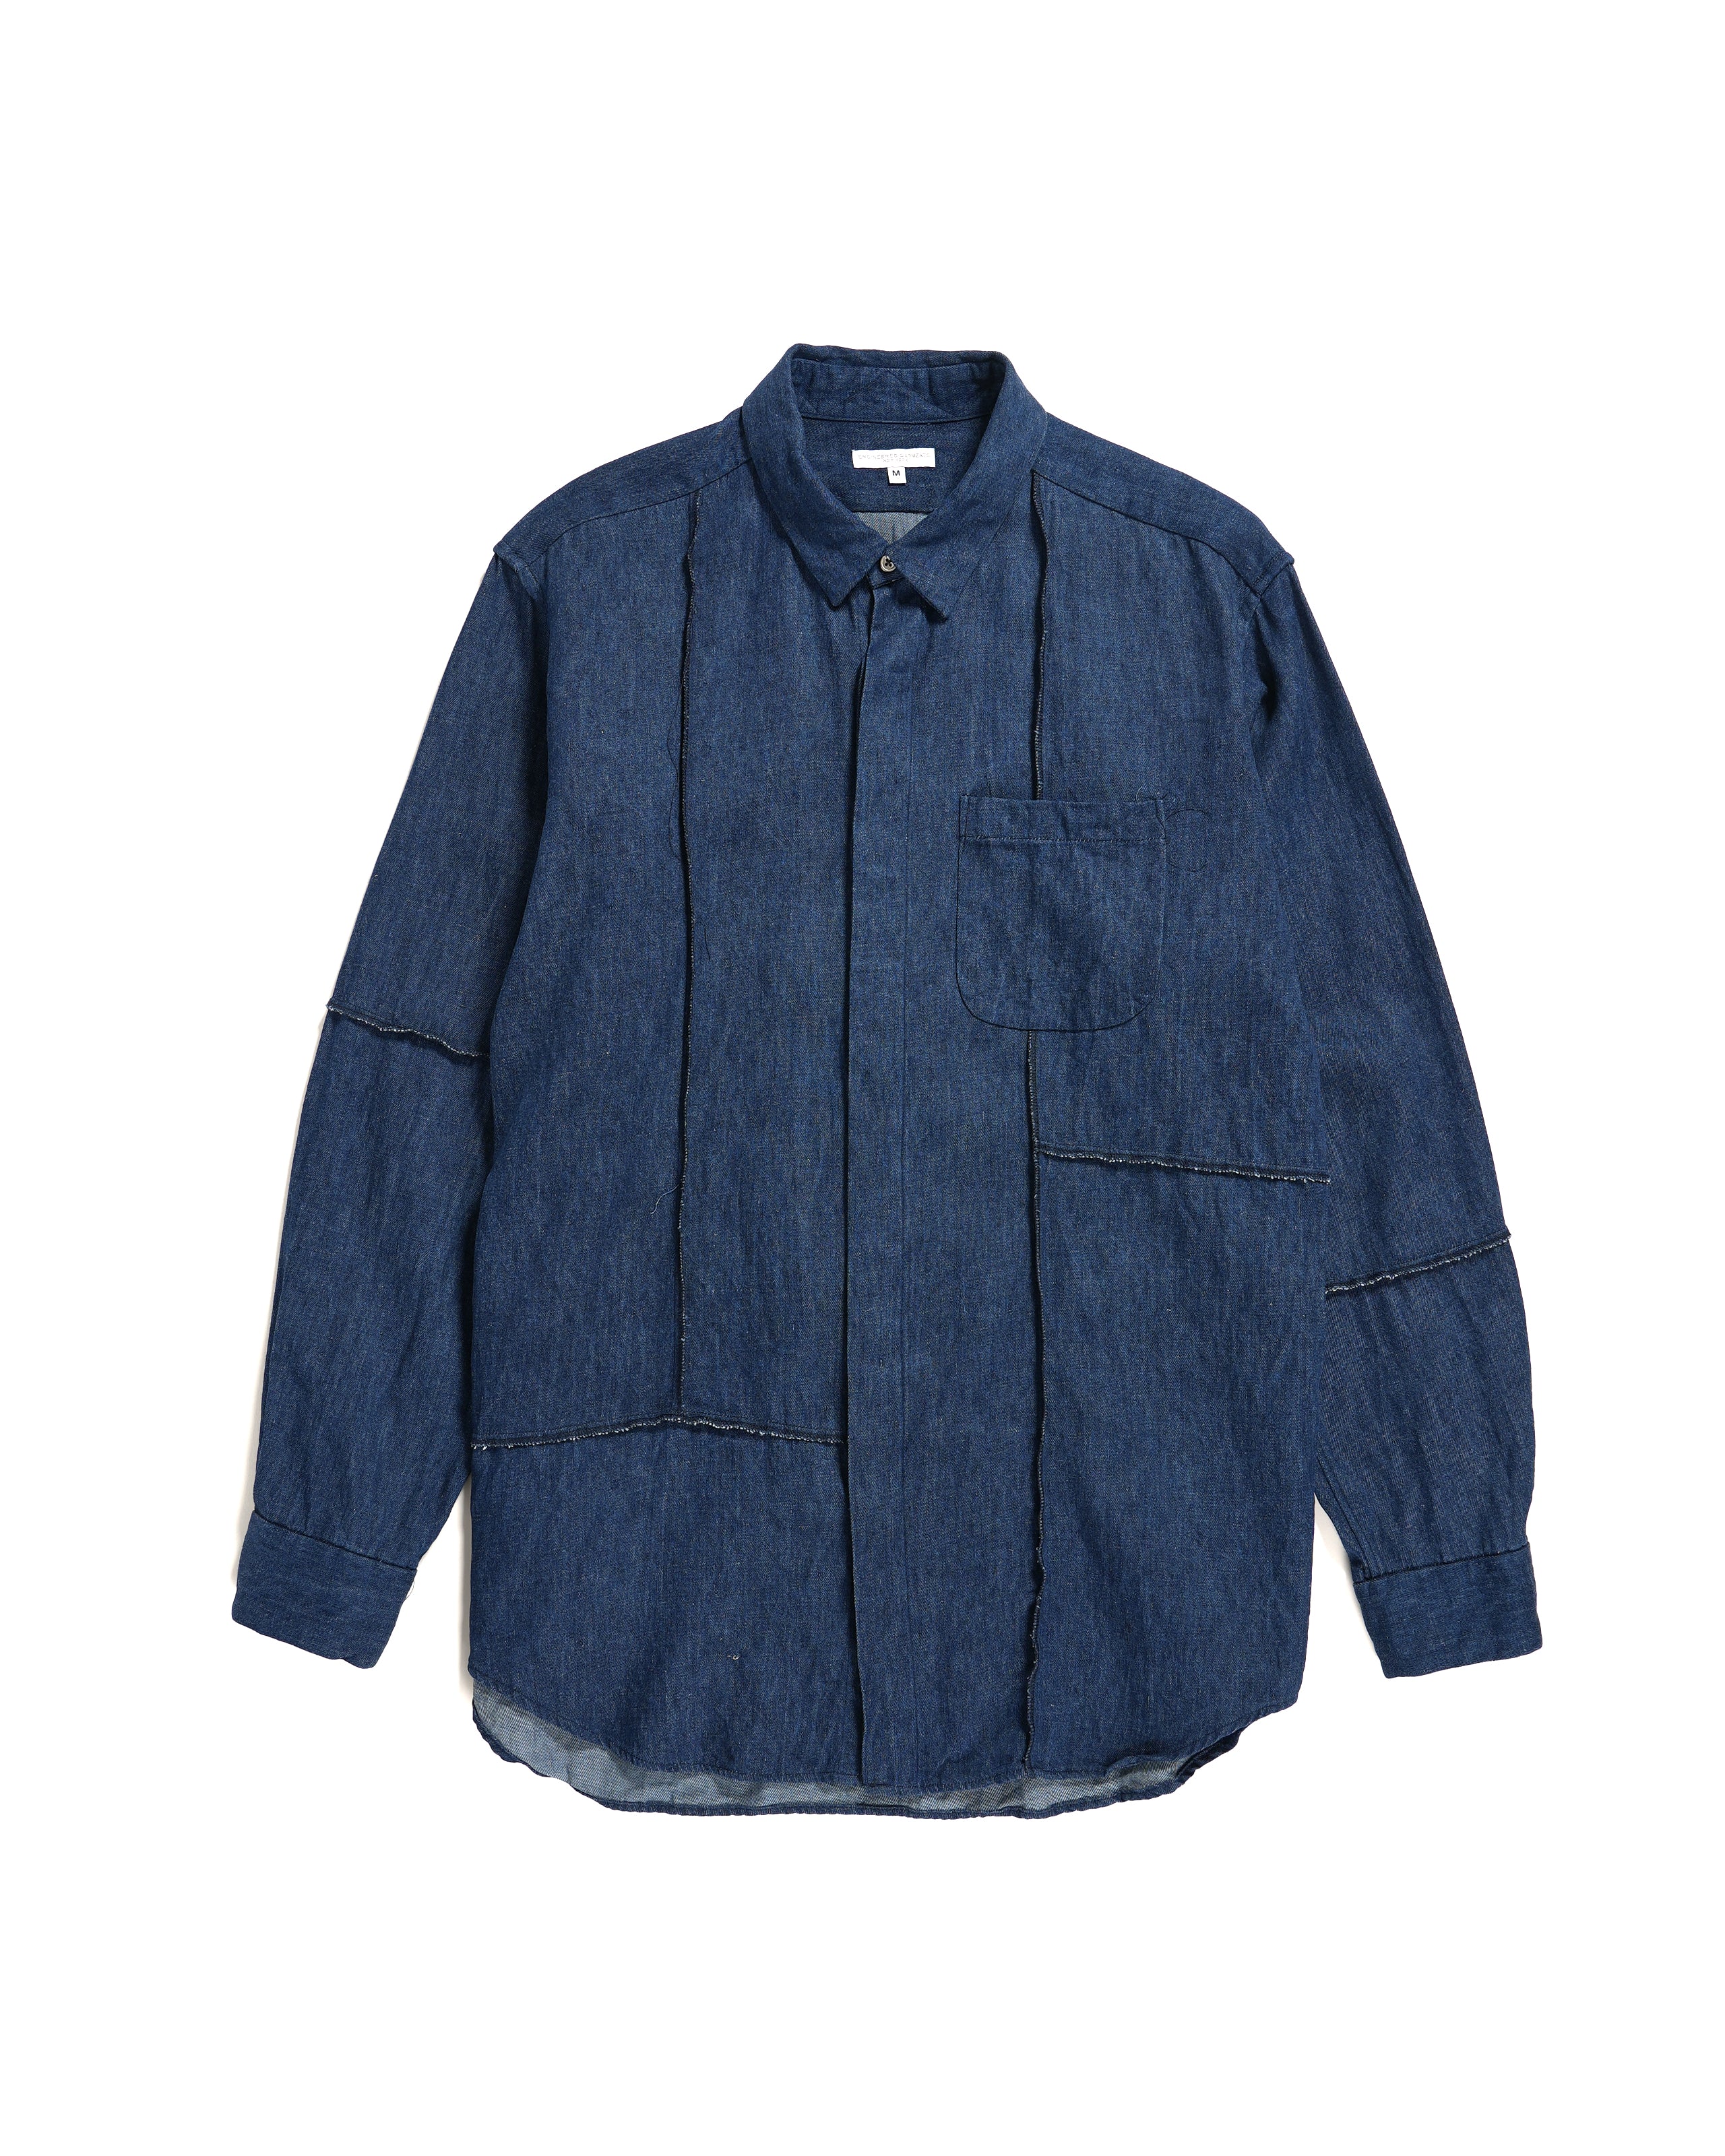 Engineered Garments Combo Short Collar Shirt - Navy Hemp Cotton Denim